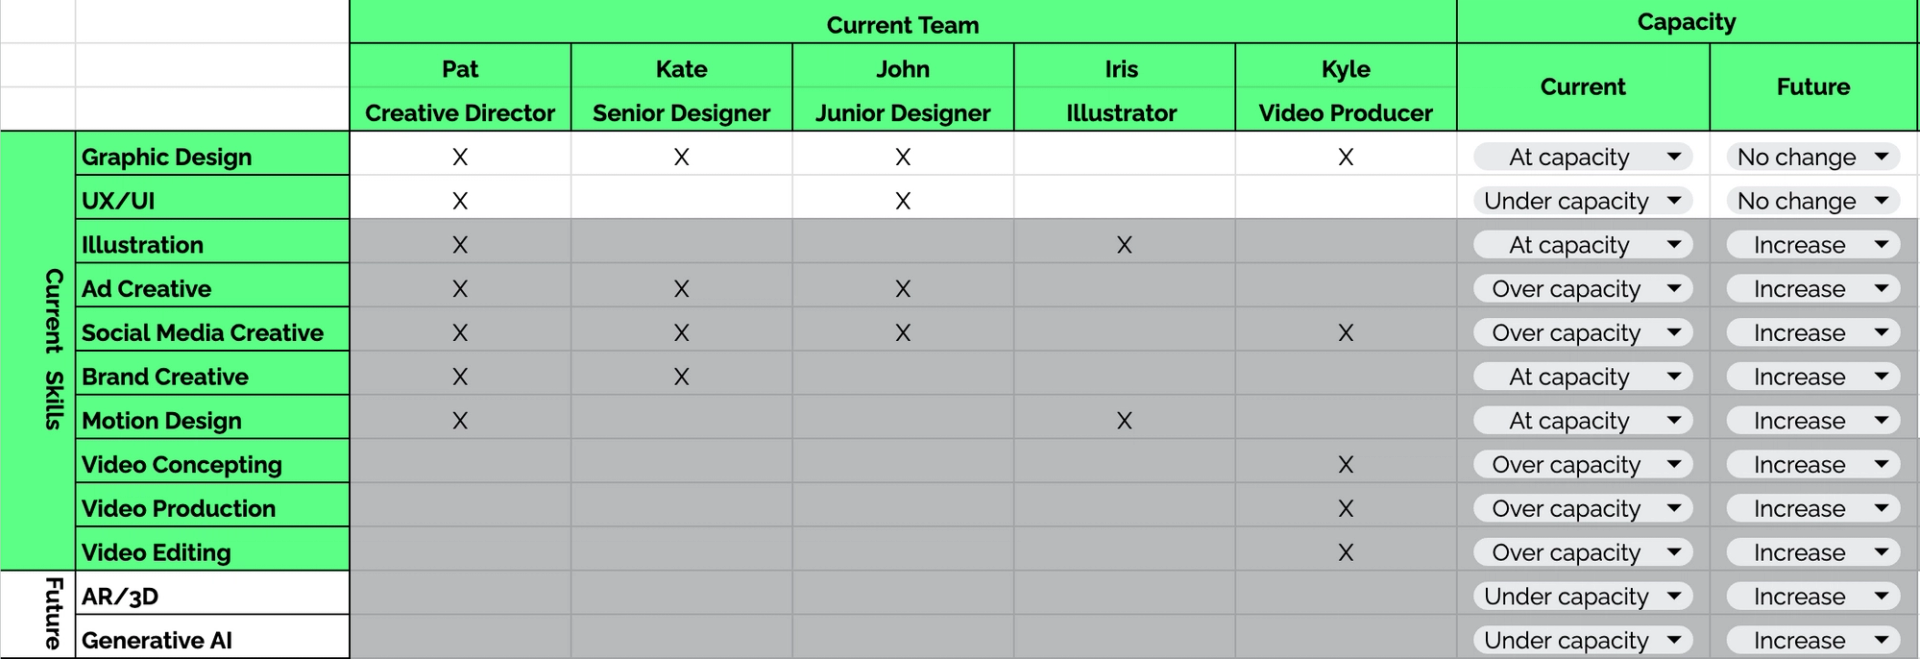 Creative Team Skills Matrix With Capacity 